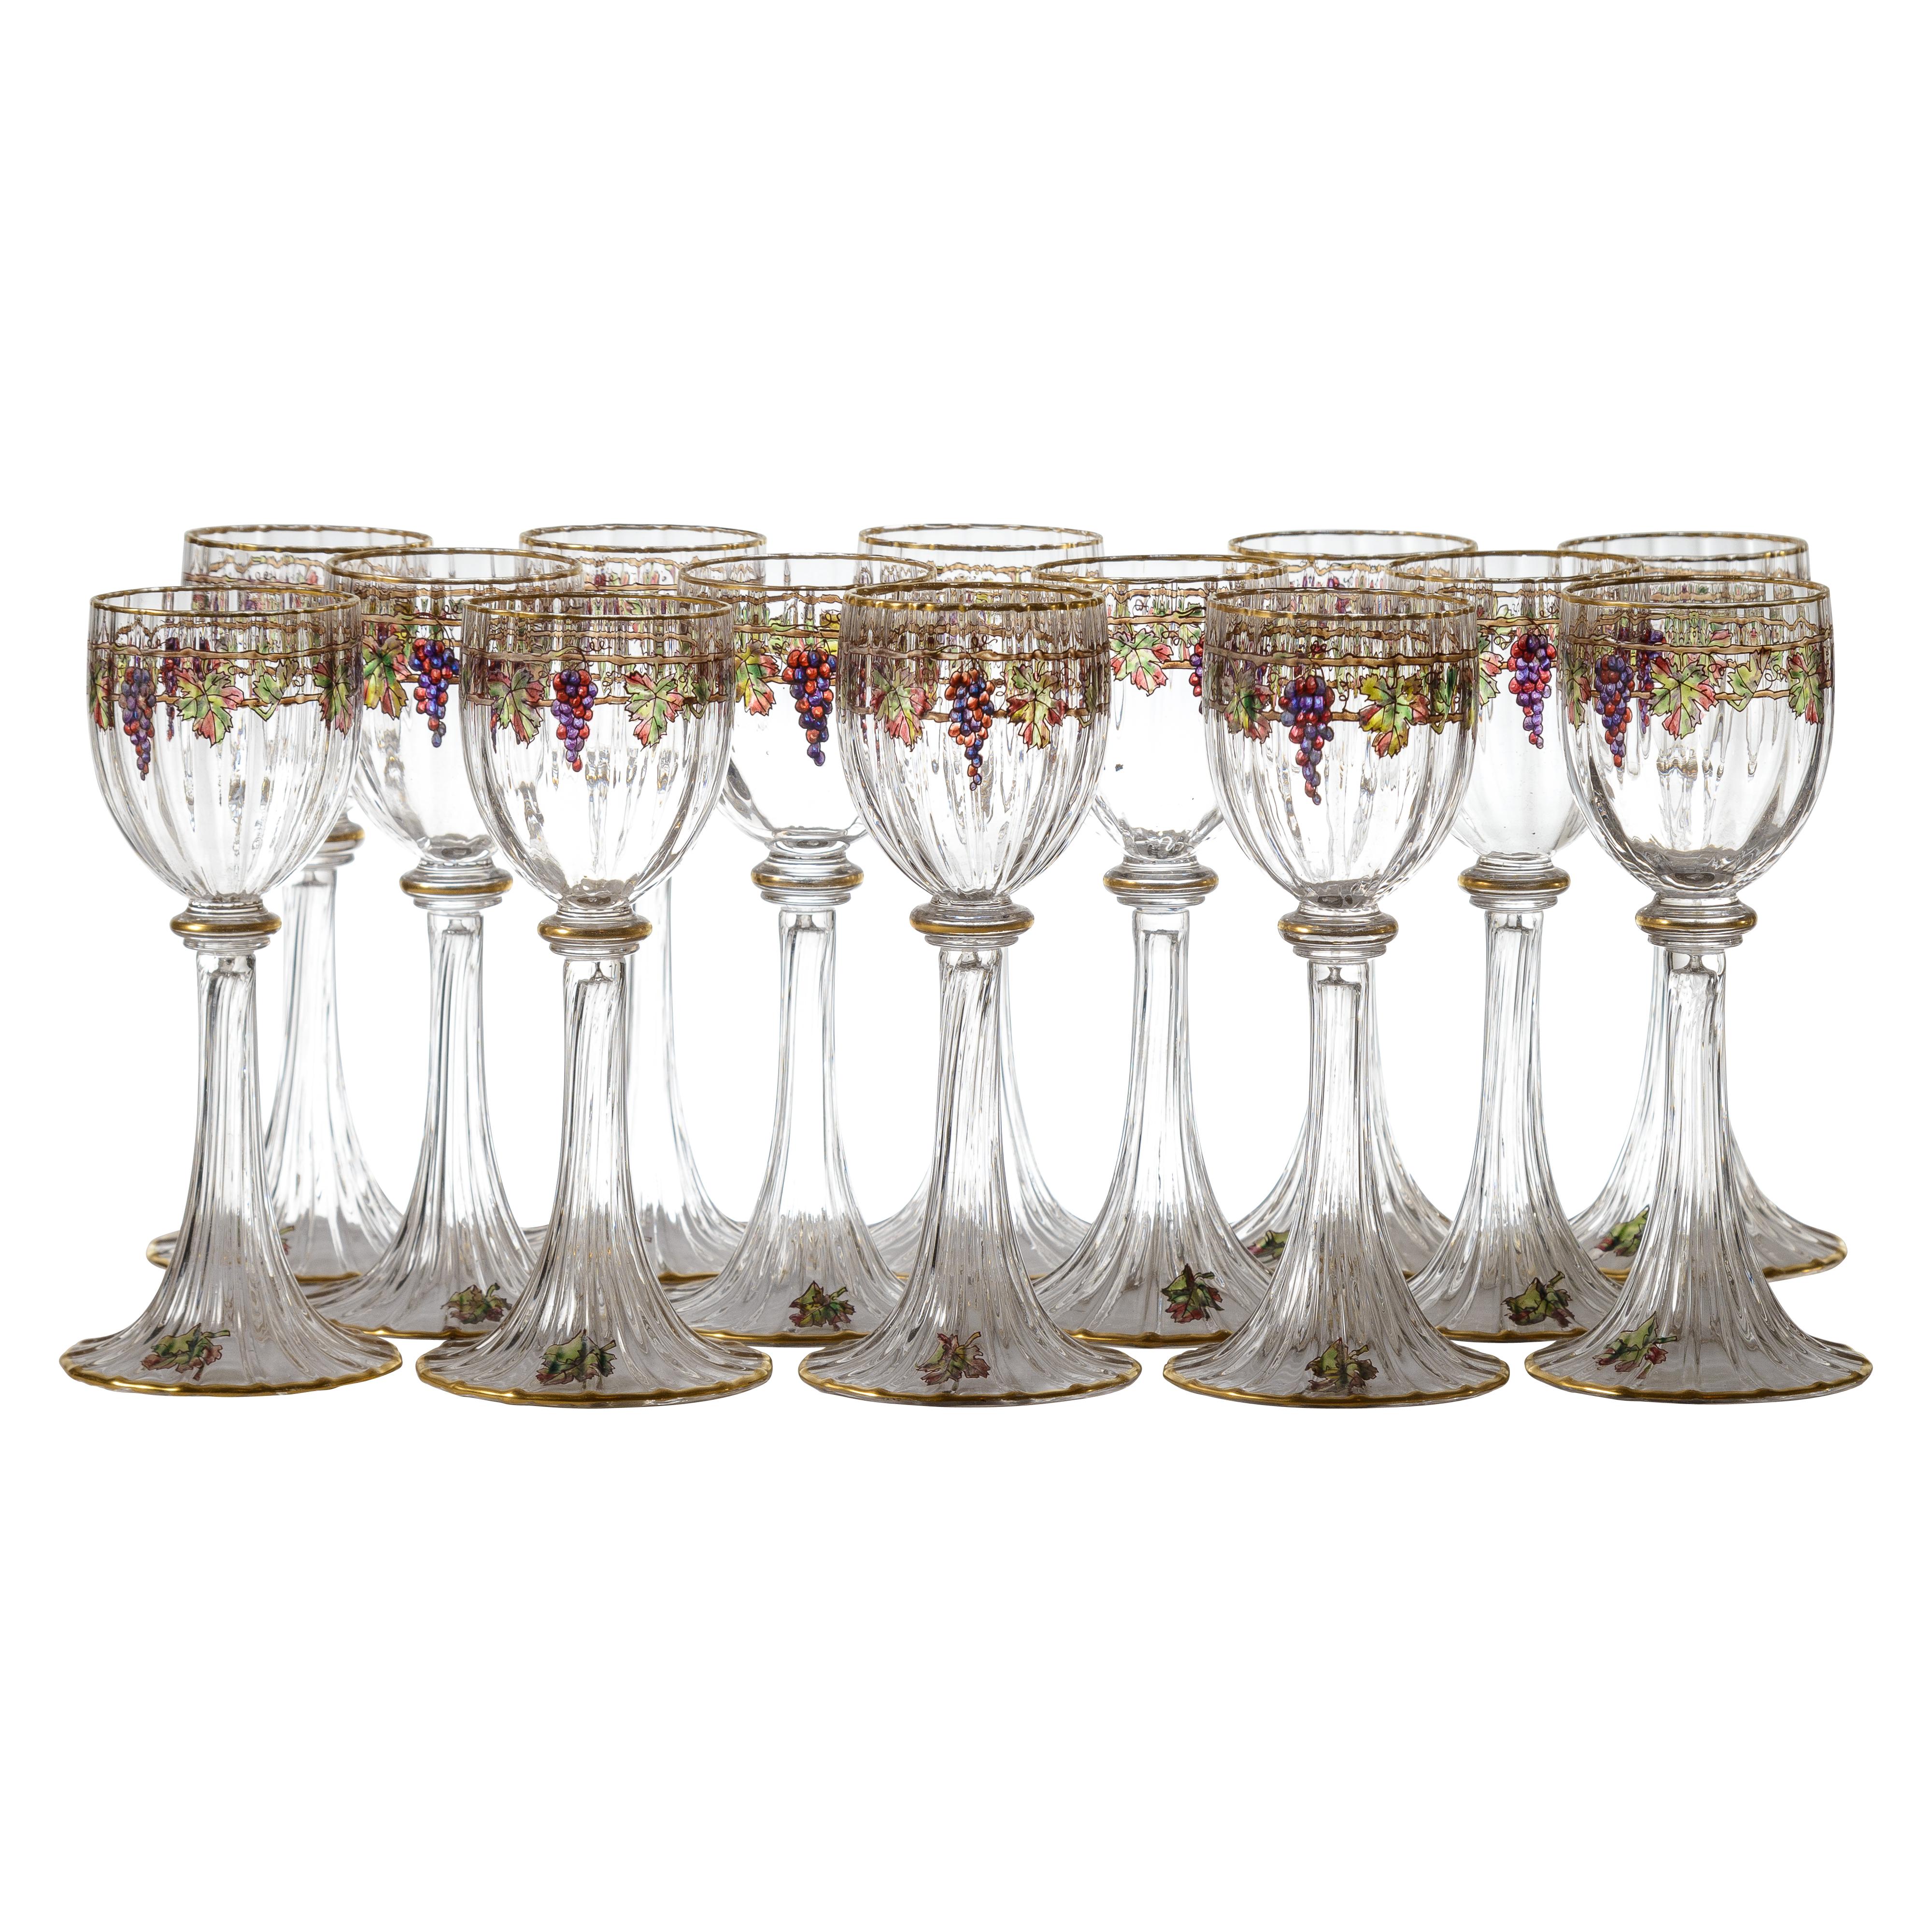 Gold Set of 14 Antique Grape & Vine Gilded Wine Goblets, 19th Century, circa 1880s